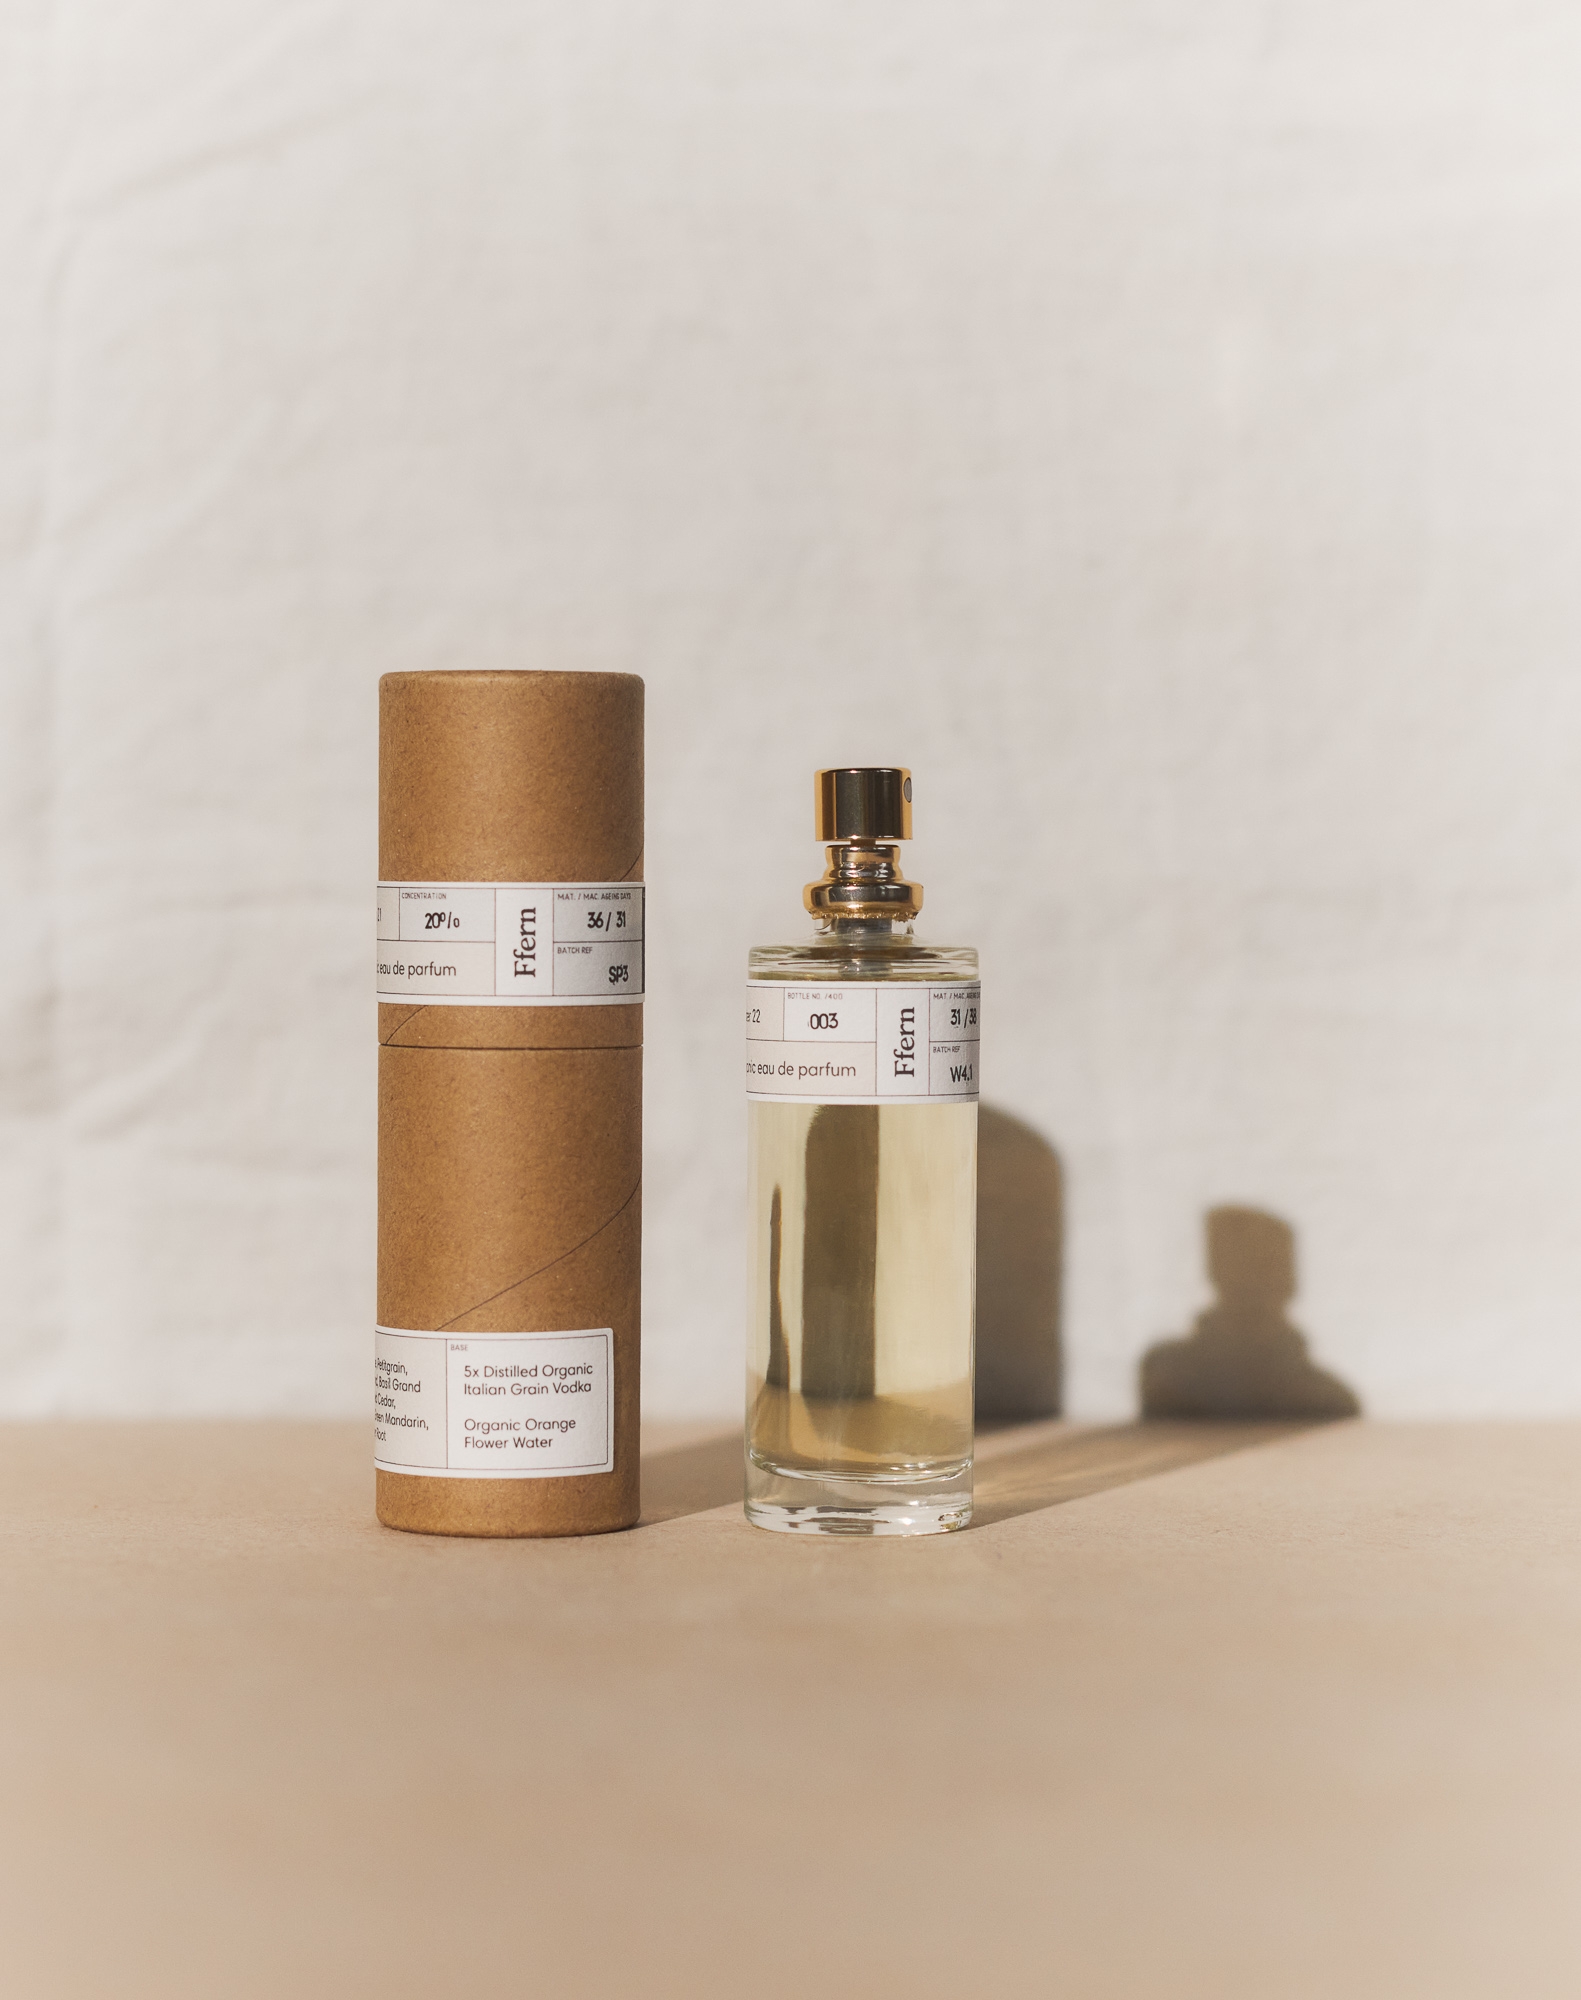 Ffern perfume bottle alongside ffern sustainable perfume tube